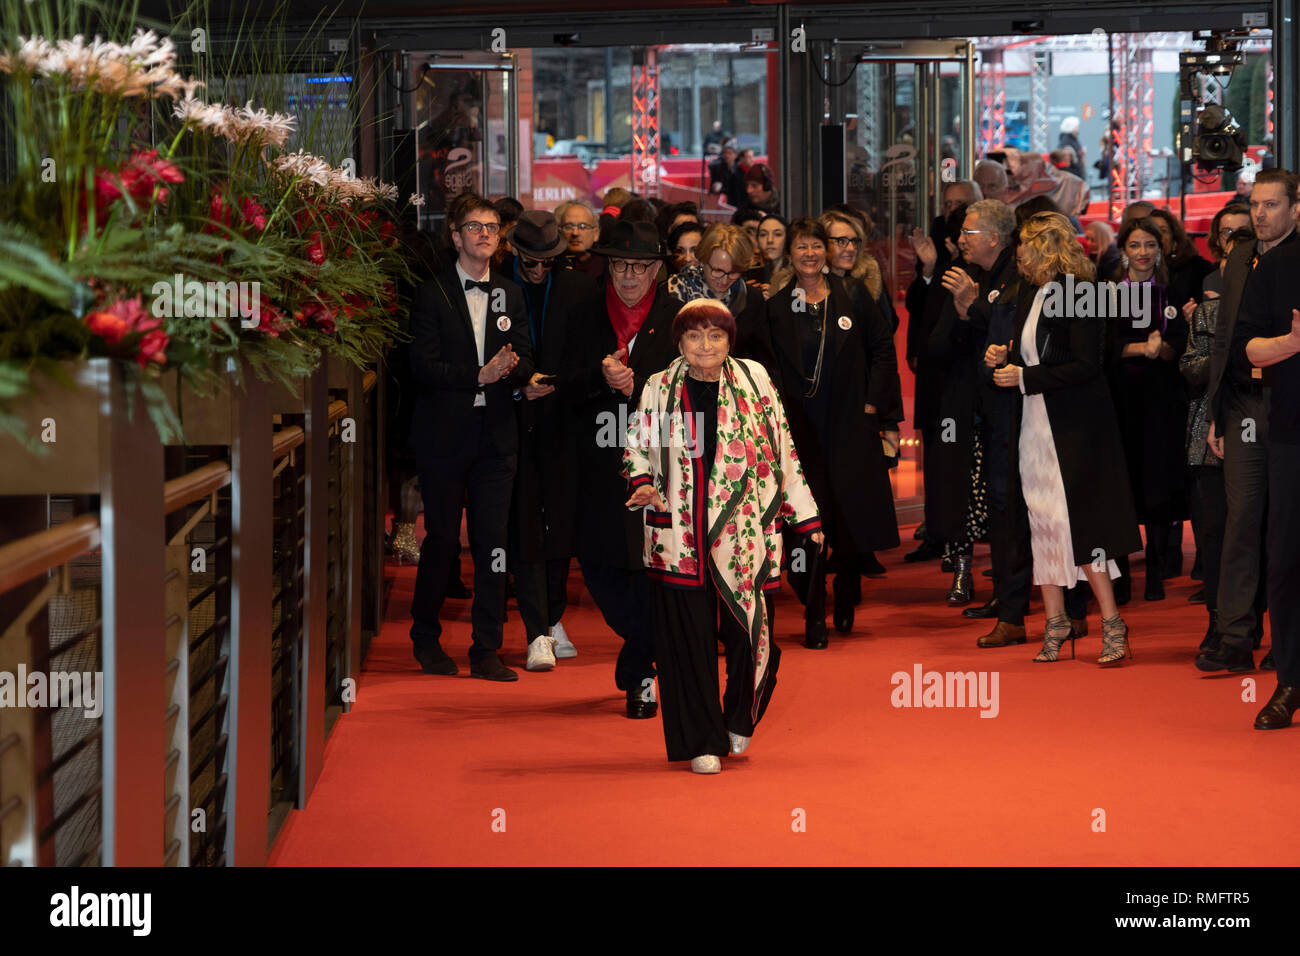 Berlín, Alemania. 13 Feb, 2019. Preise de Agnes Varda, Berlinale 2019. Crédito: Beata Siewicz/Pacific Press/Alamy Live News Foto de stock